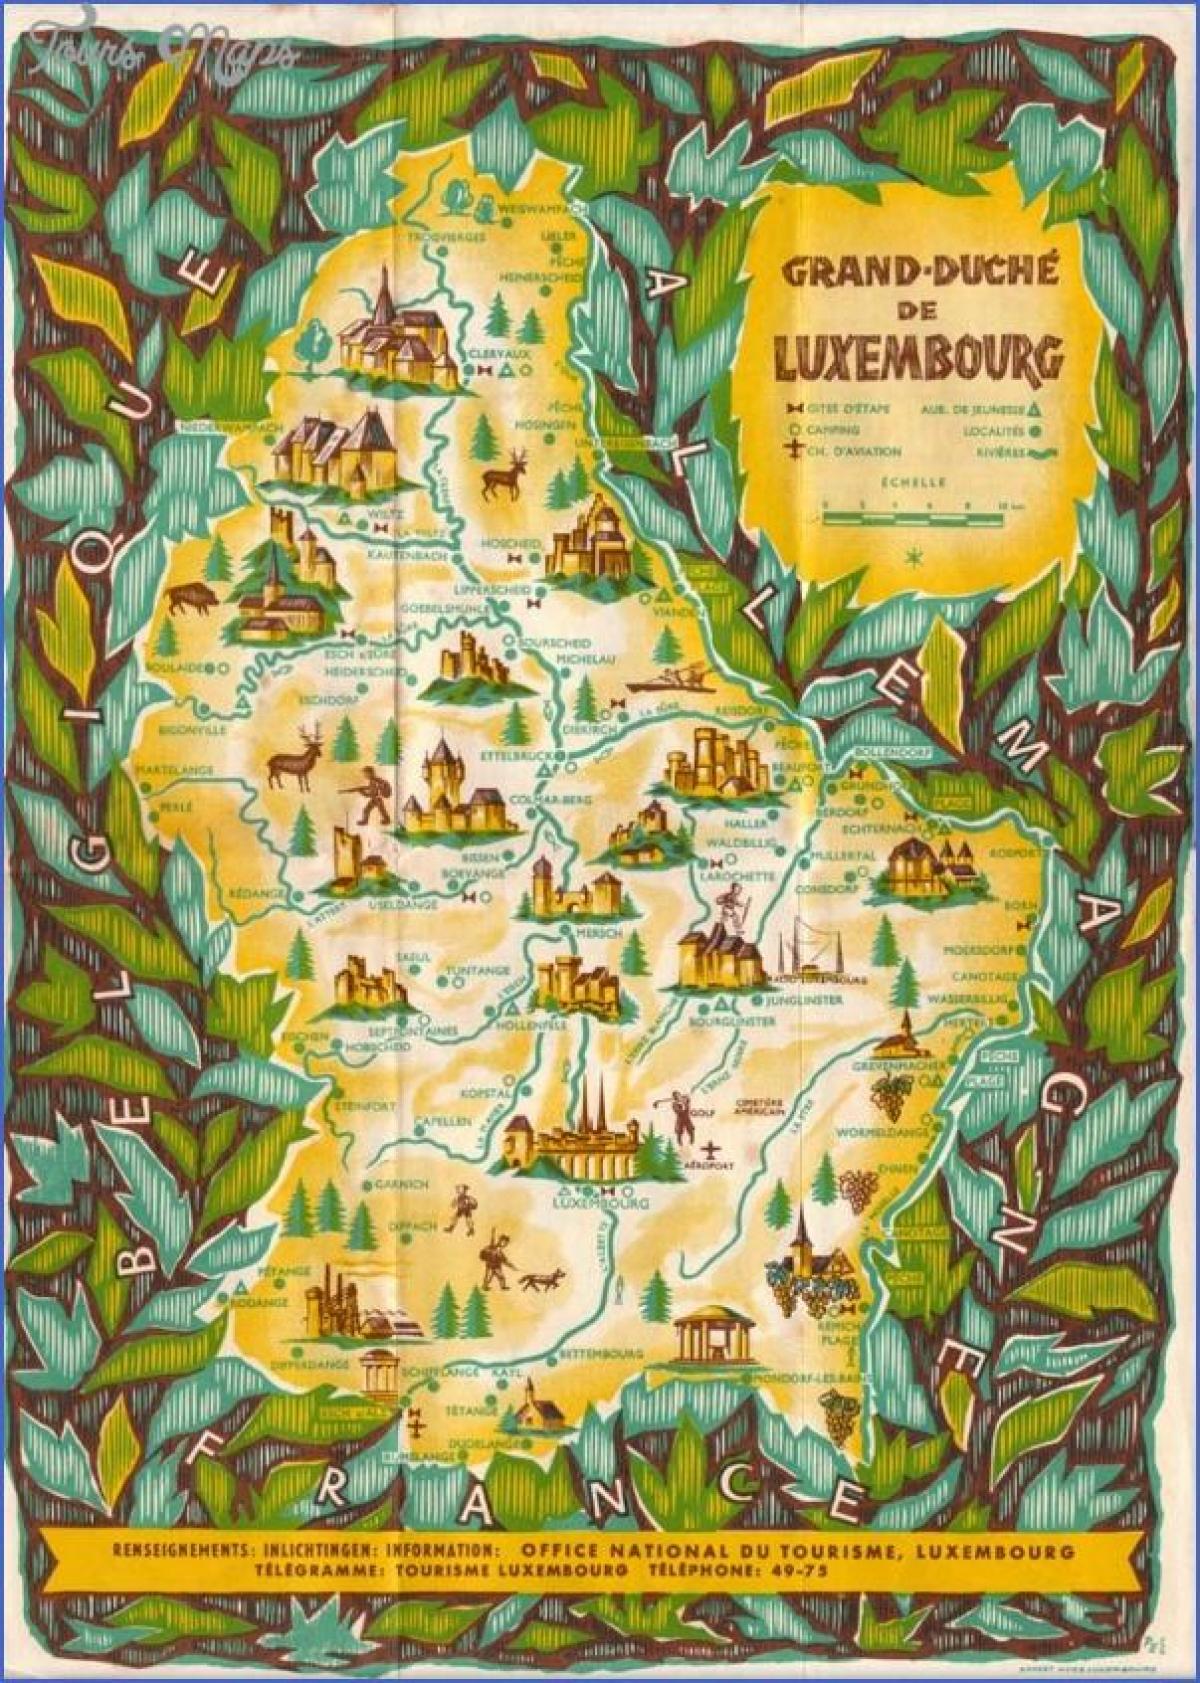 peta Luxembourg bersiar-siar